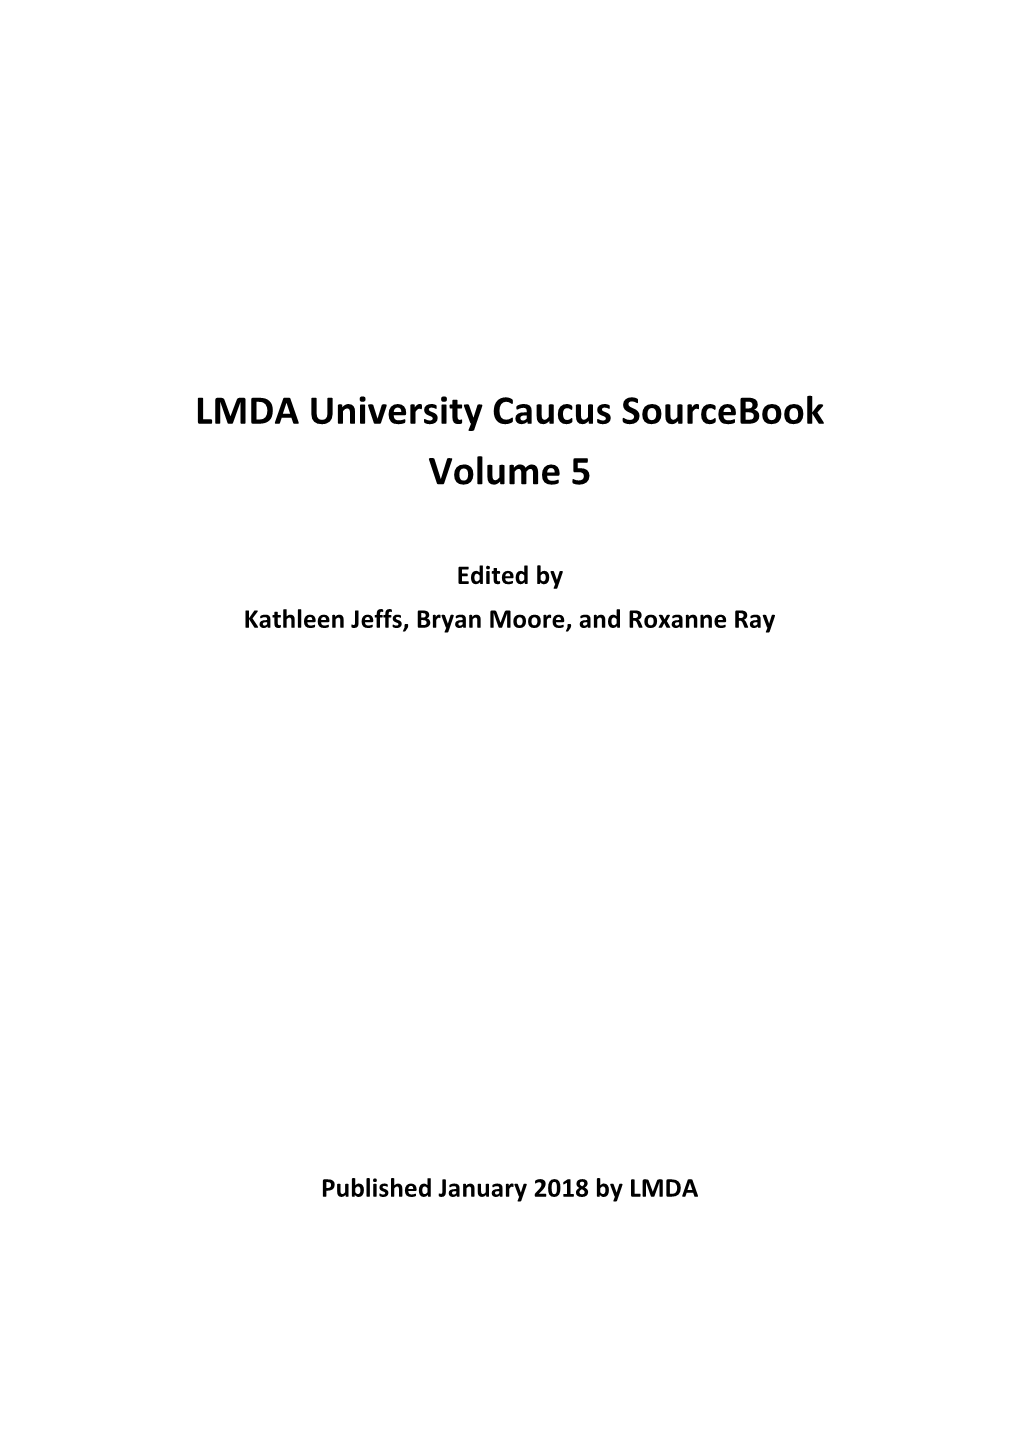 LMDA University Caucus Sourcebook Volume 5